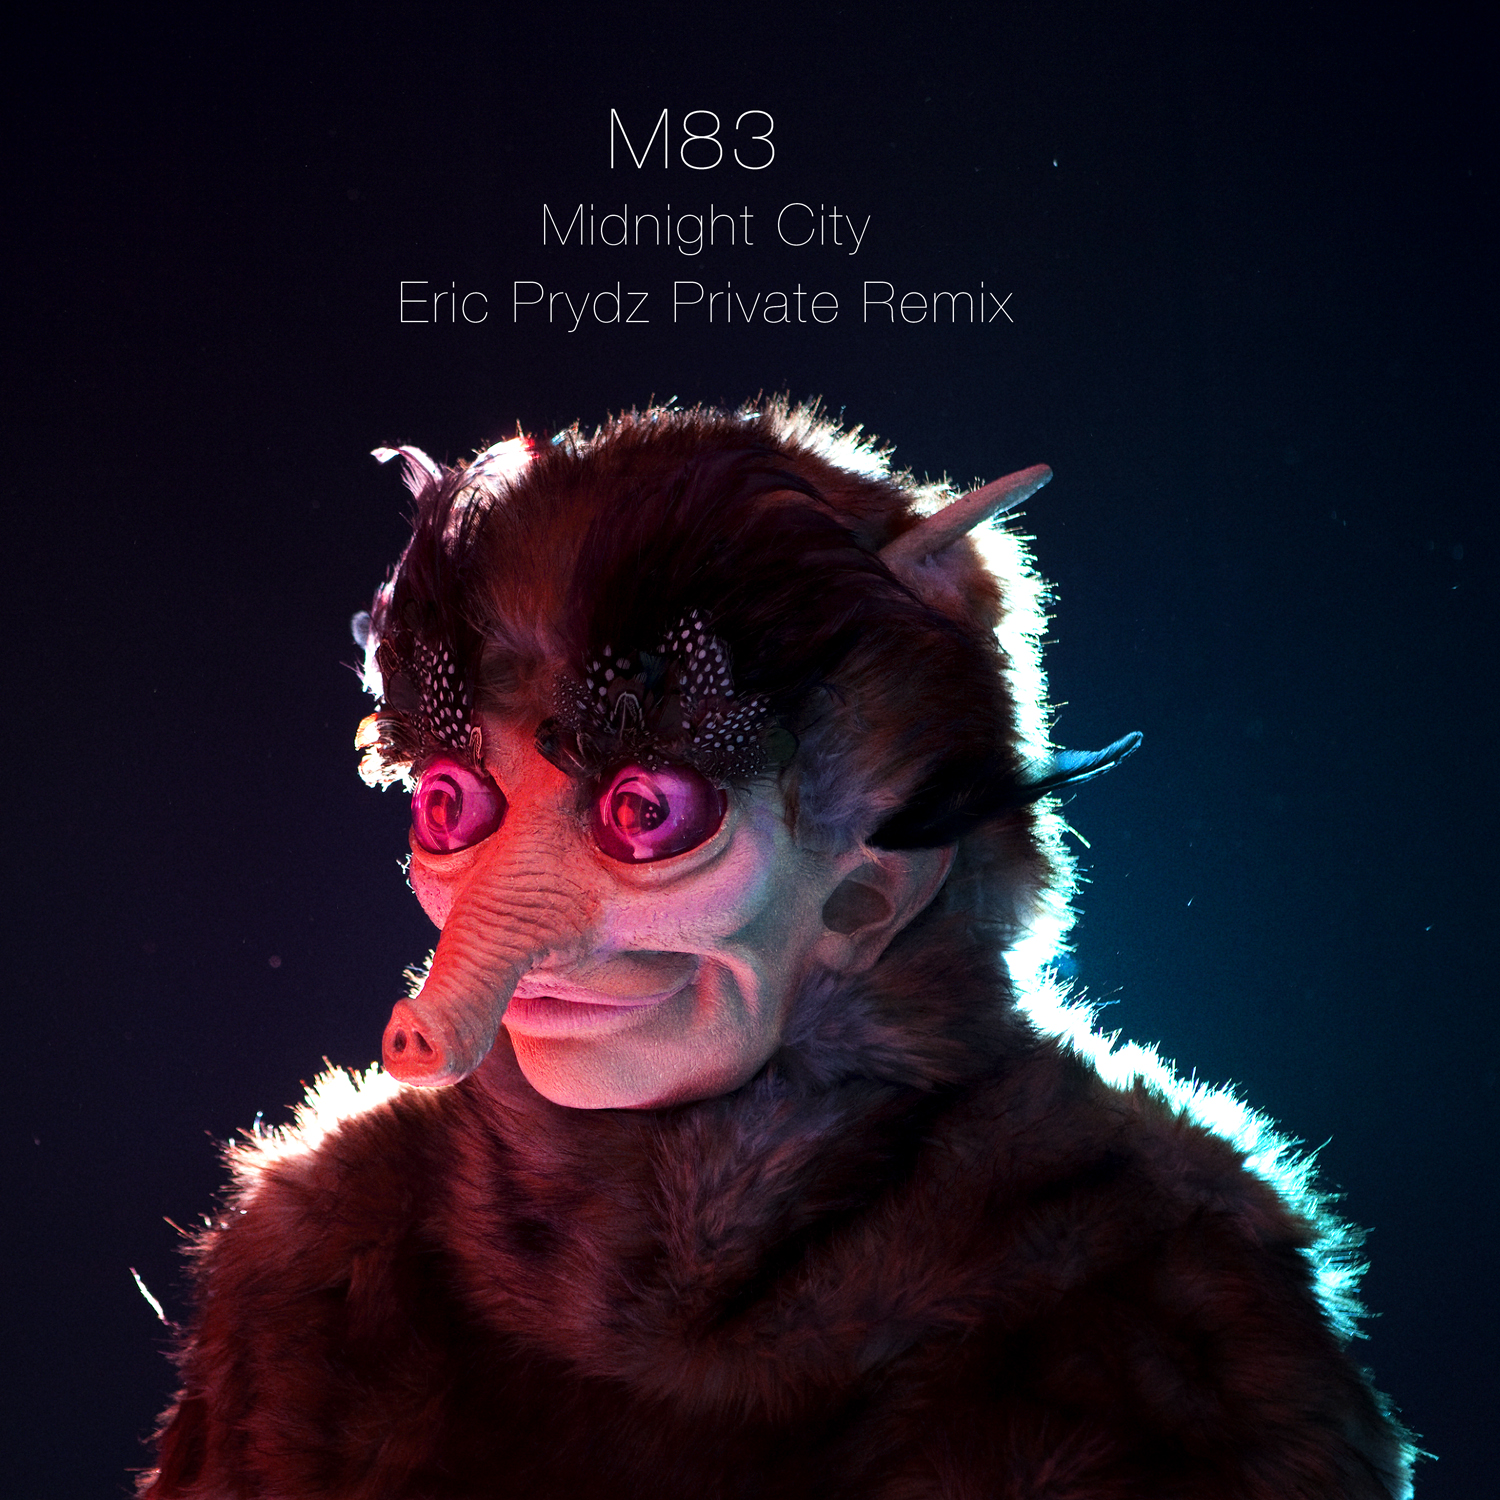 Midnight City (Eric Prydz Private Remix).jpg : M83 - Midnight City (Eric Prydz Private Remix)